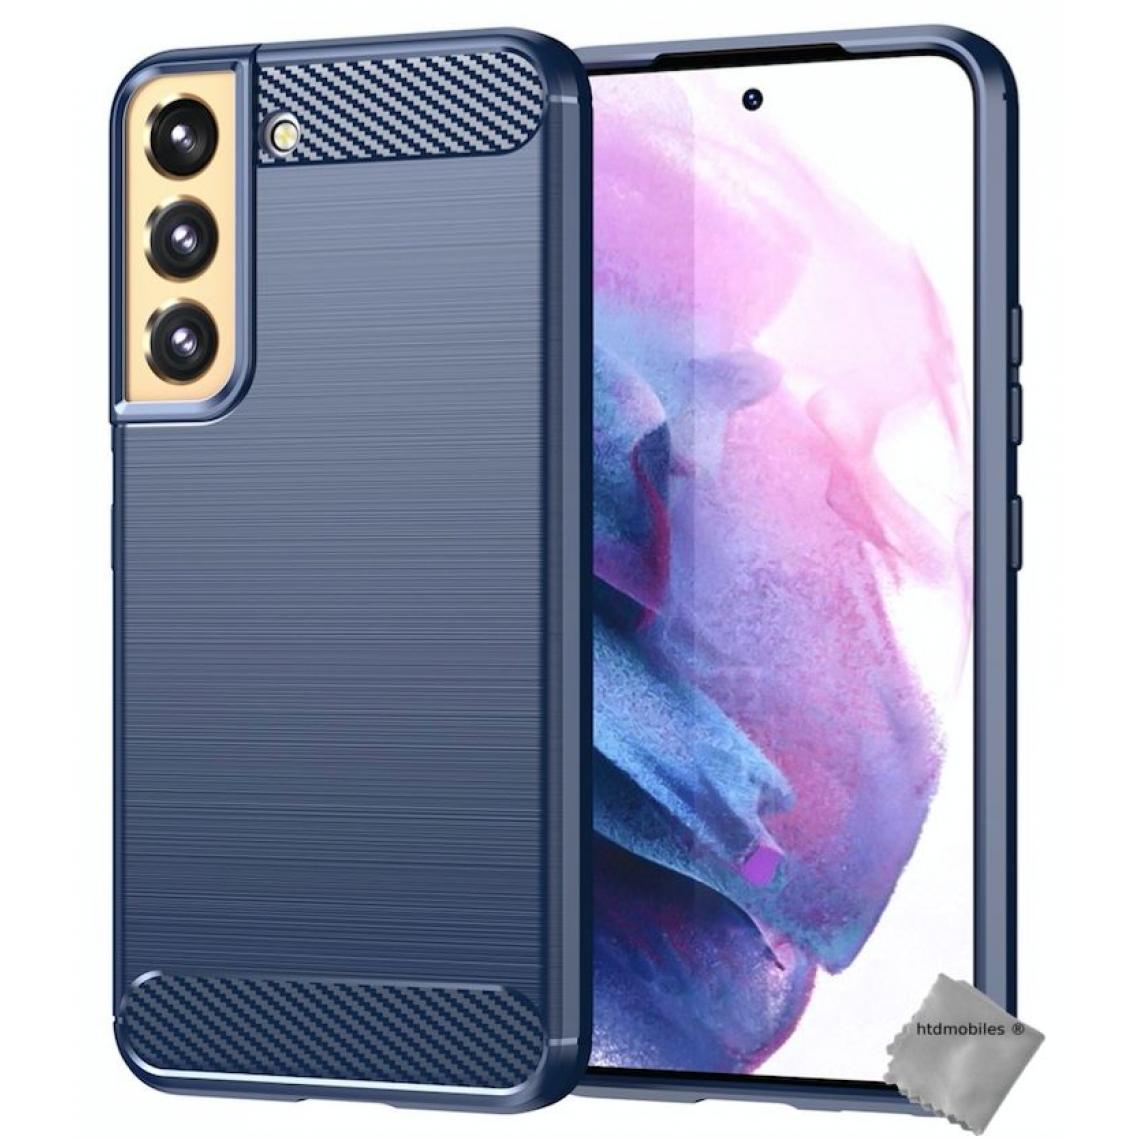 Htdmobiles - Housse etui coque silicone gel carbone pour Samsung Galaxy S22 Plus 5G + film ecran - BLEU FONCE - Coque, étui smartphone